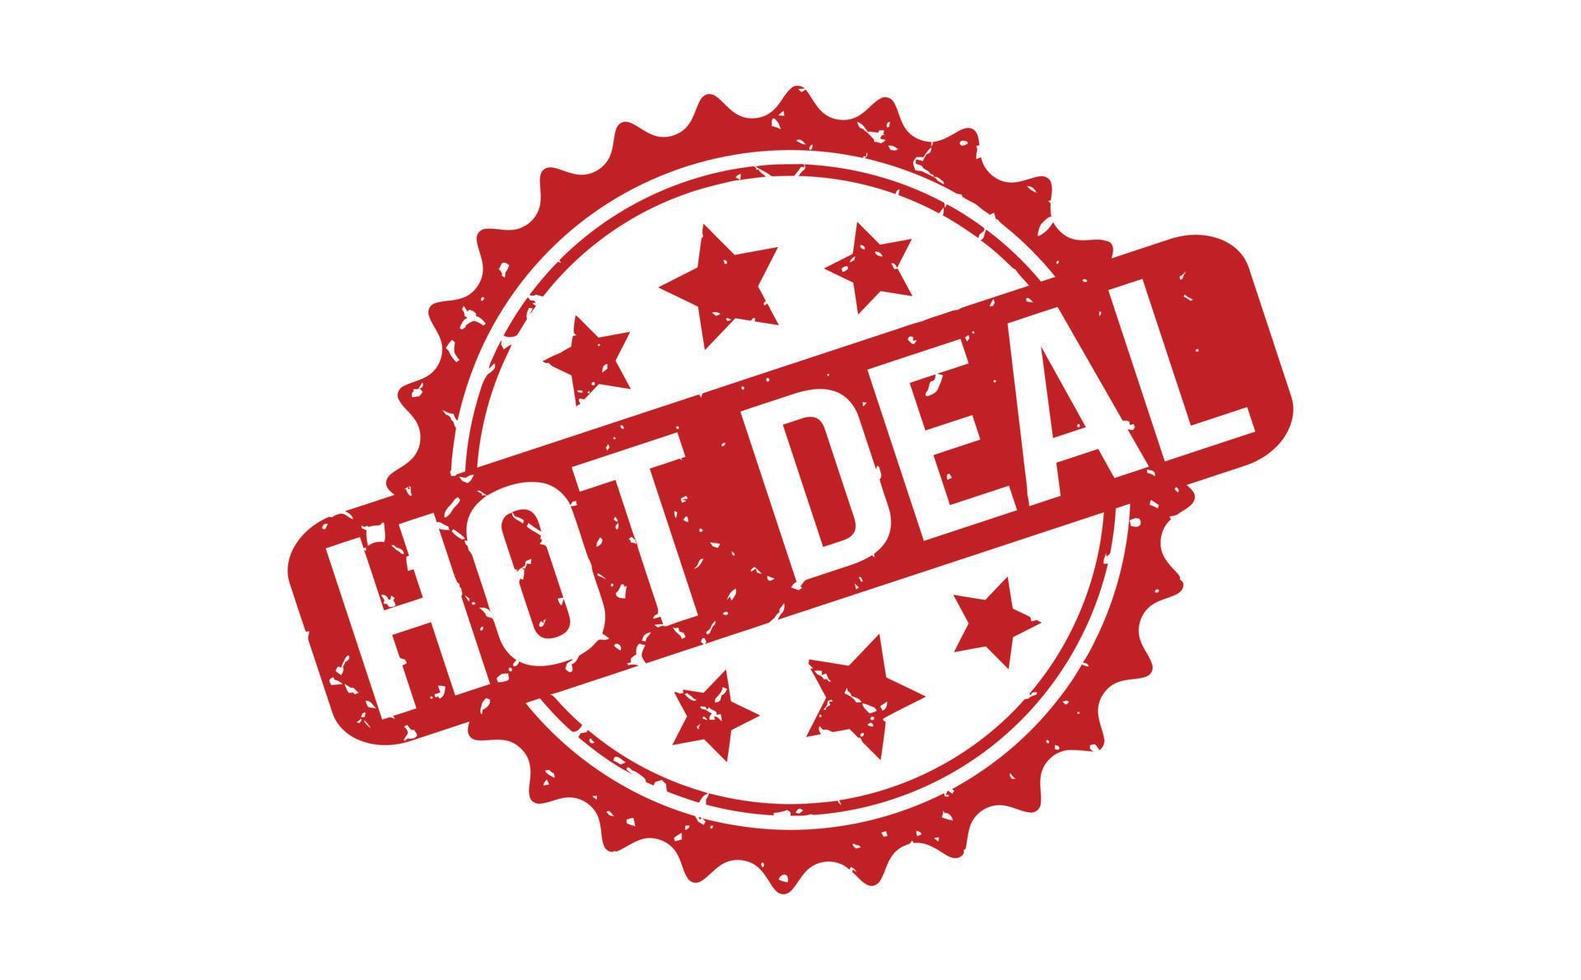 Hot Deal Rubber Stamp. Red Hot Deal Rubber Grunge Stamp Seal Vector Illustration - Vector